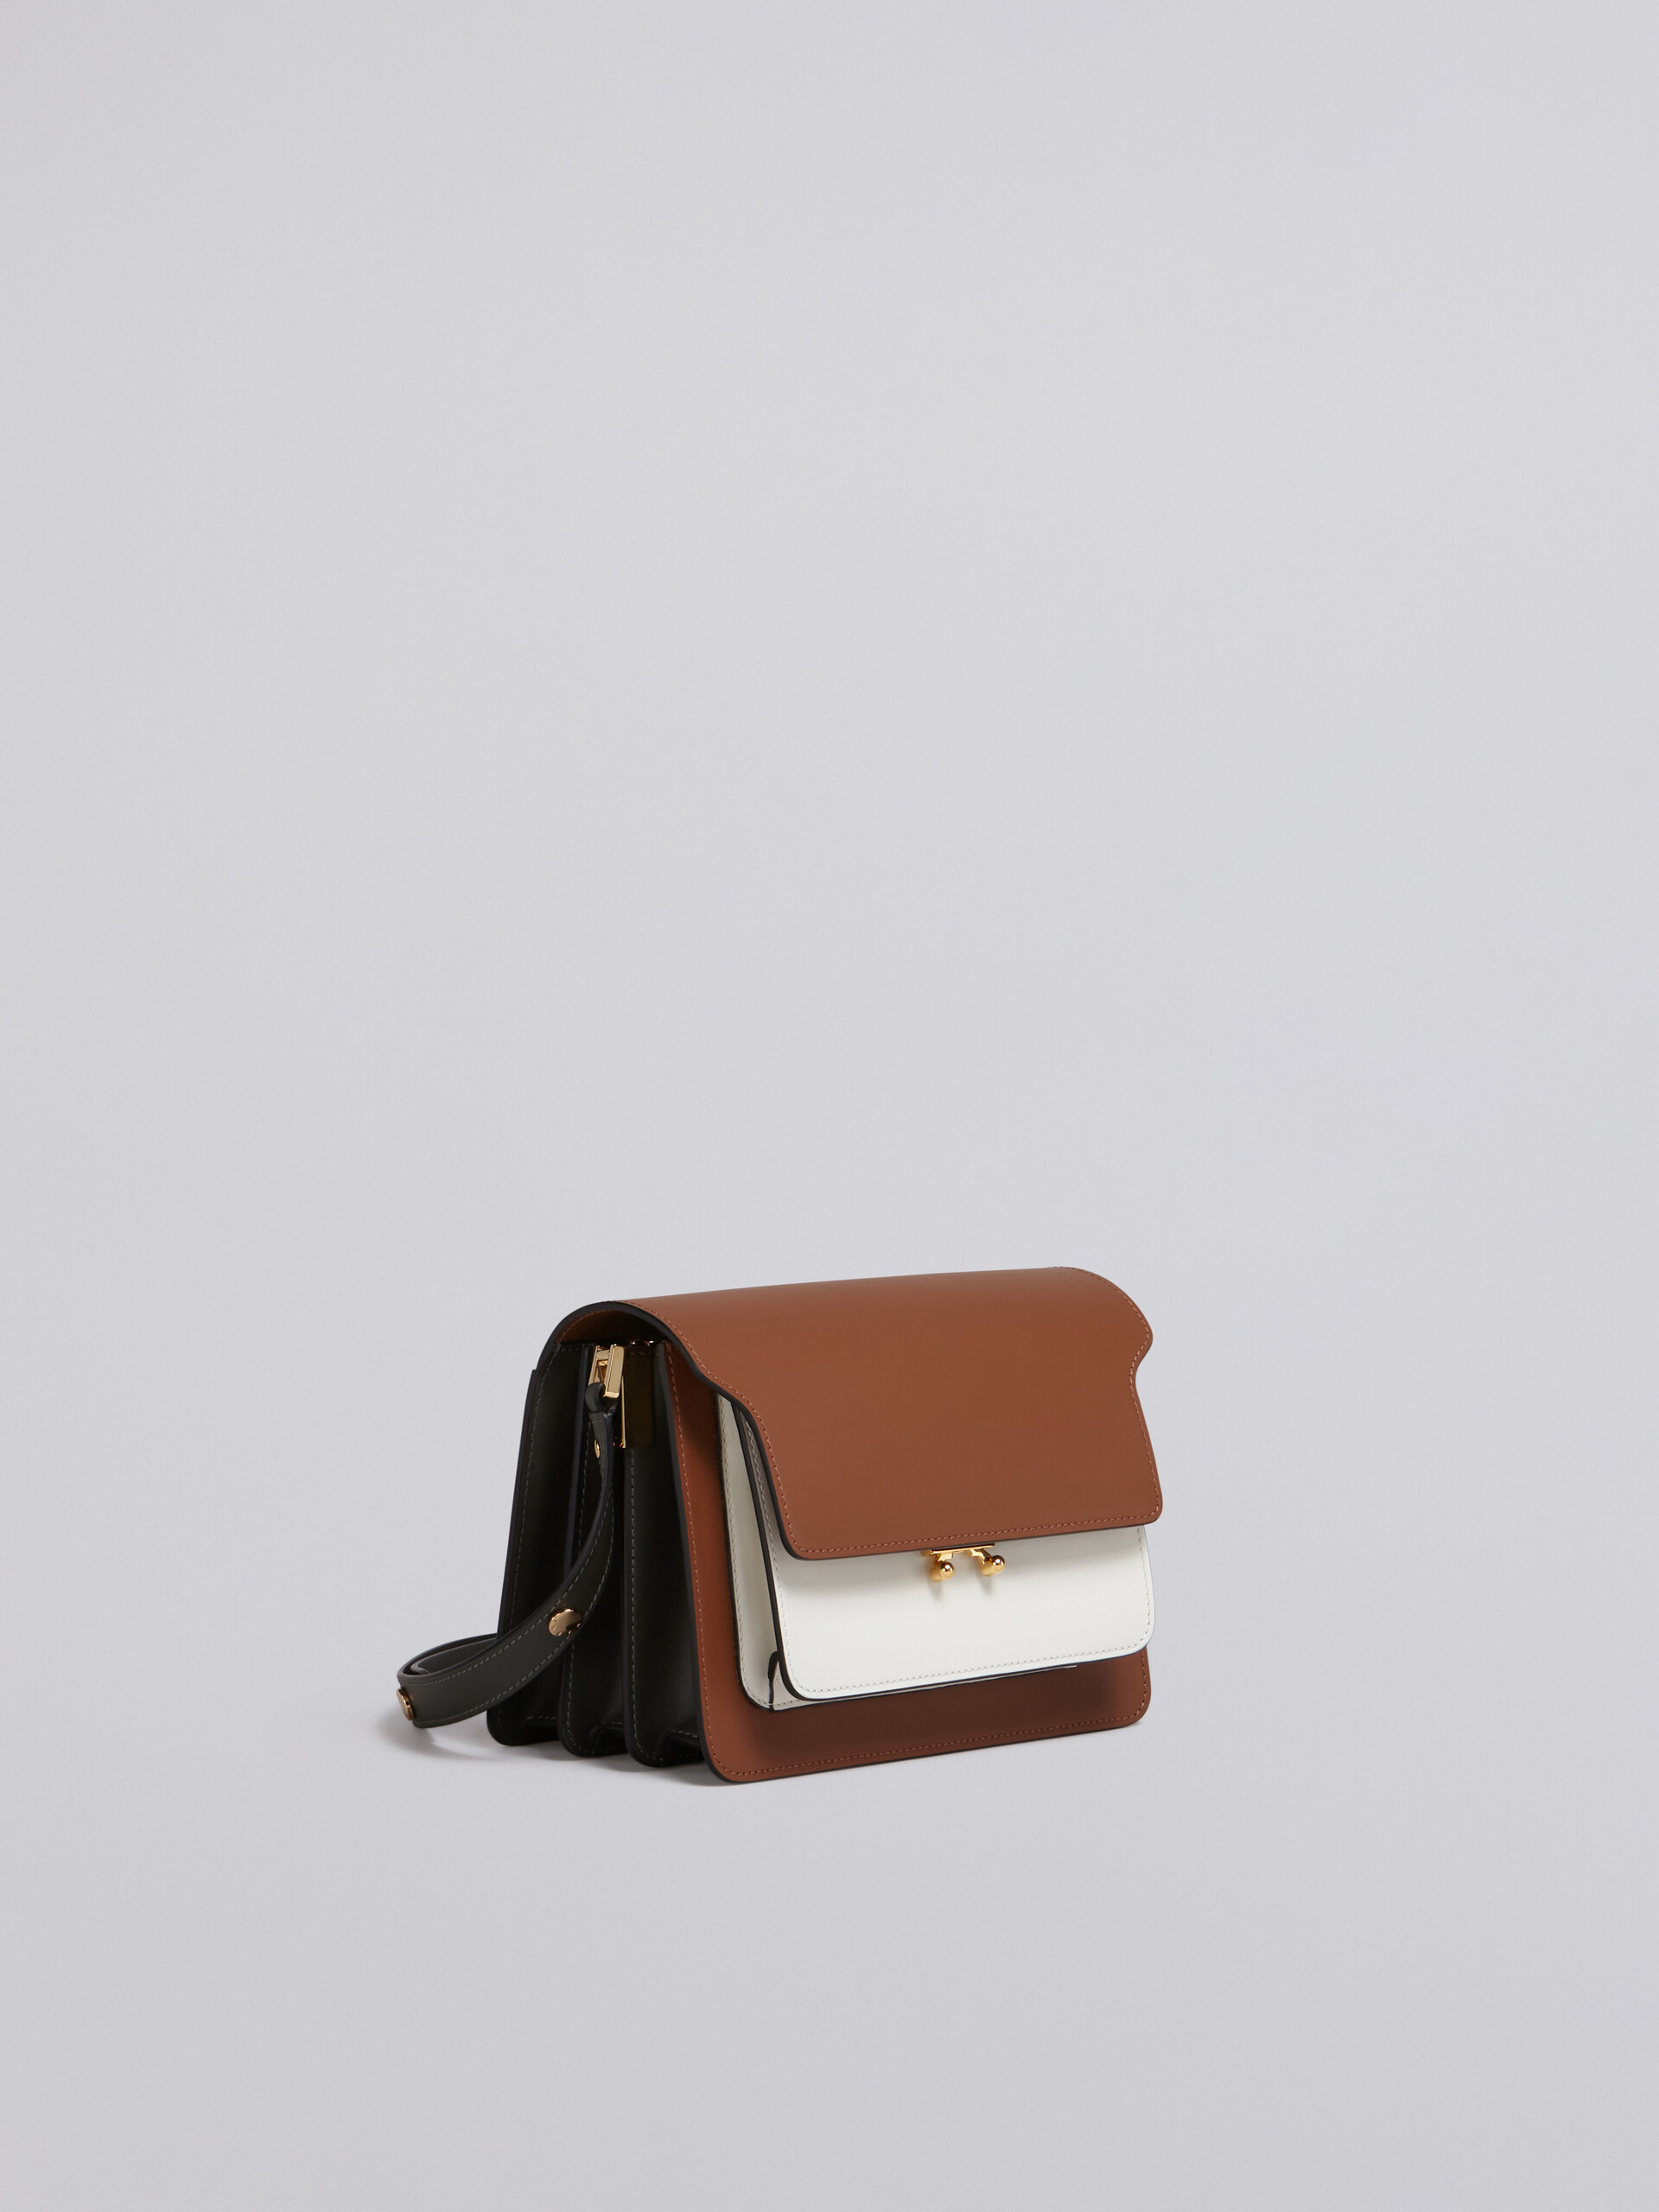 TRUNK media bag in brown white and green leather - Shoulder Bag - Image 5